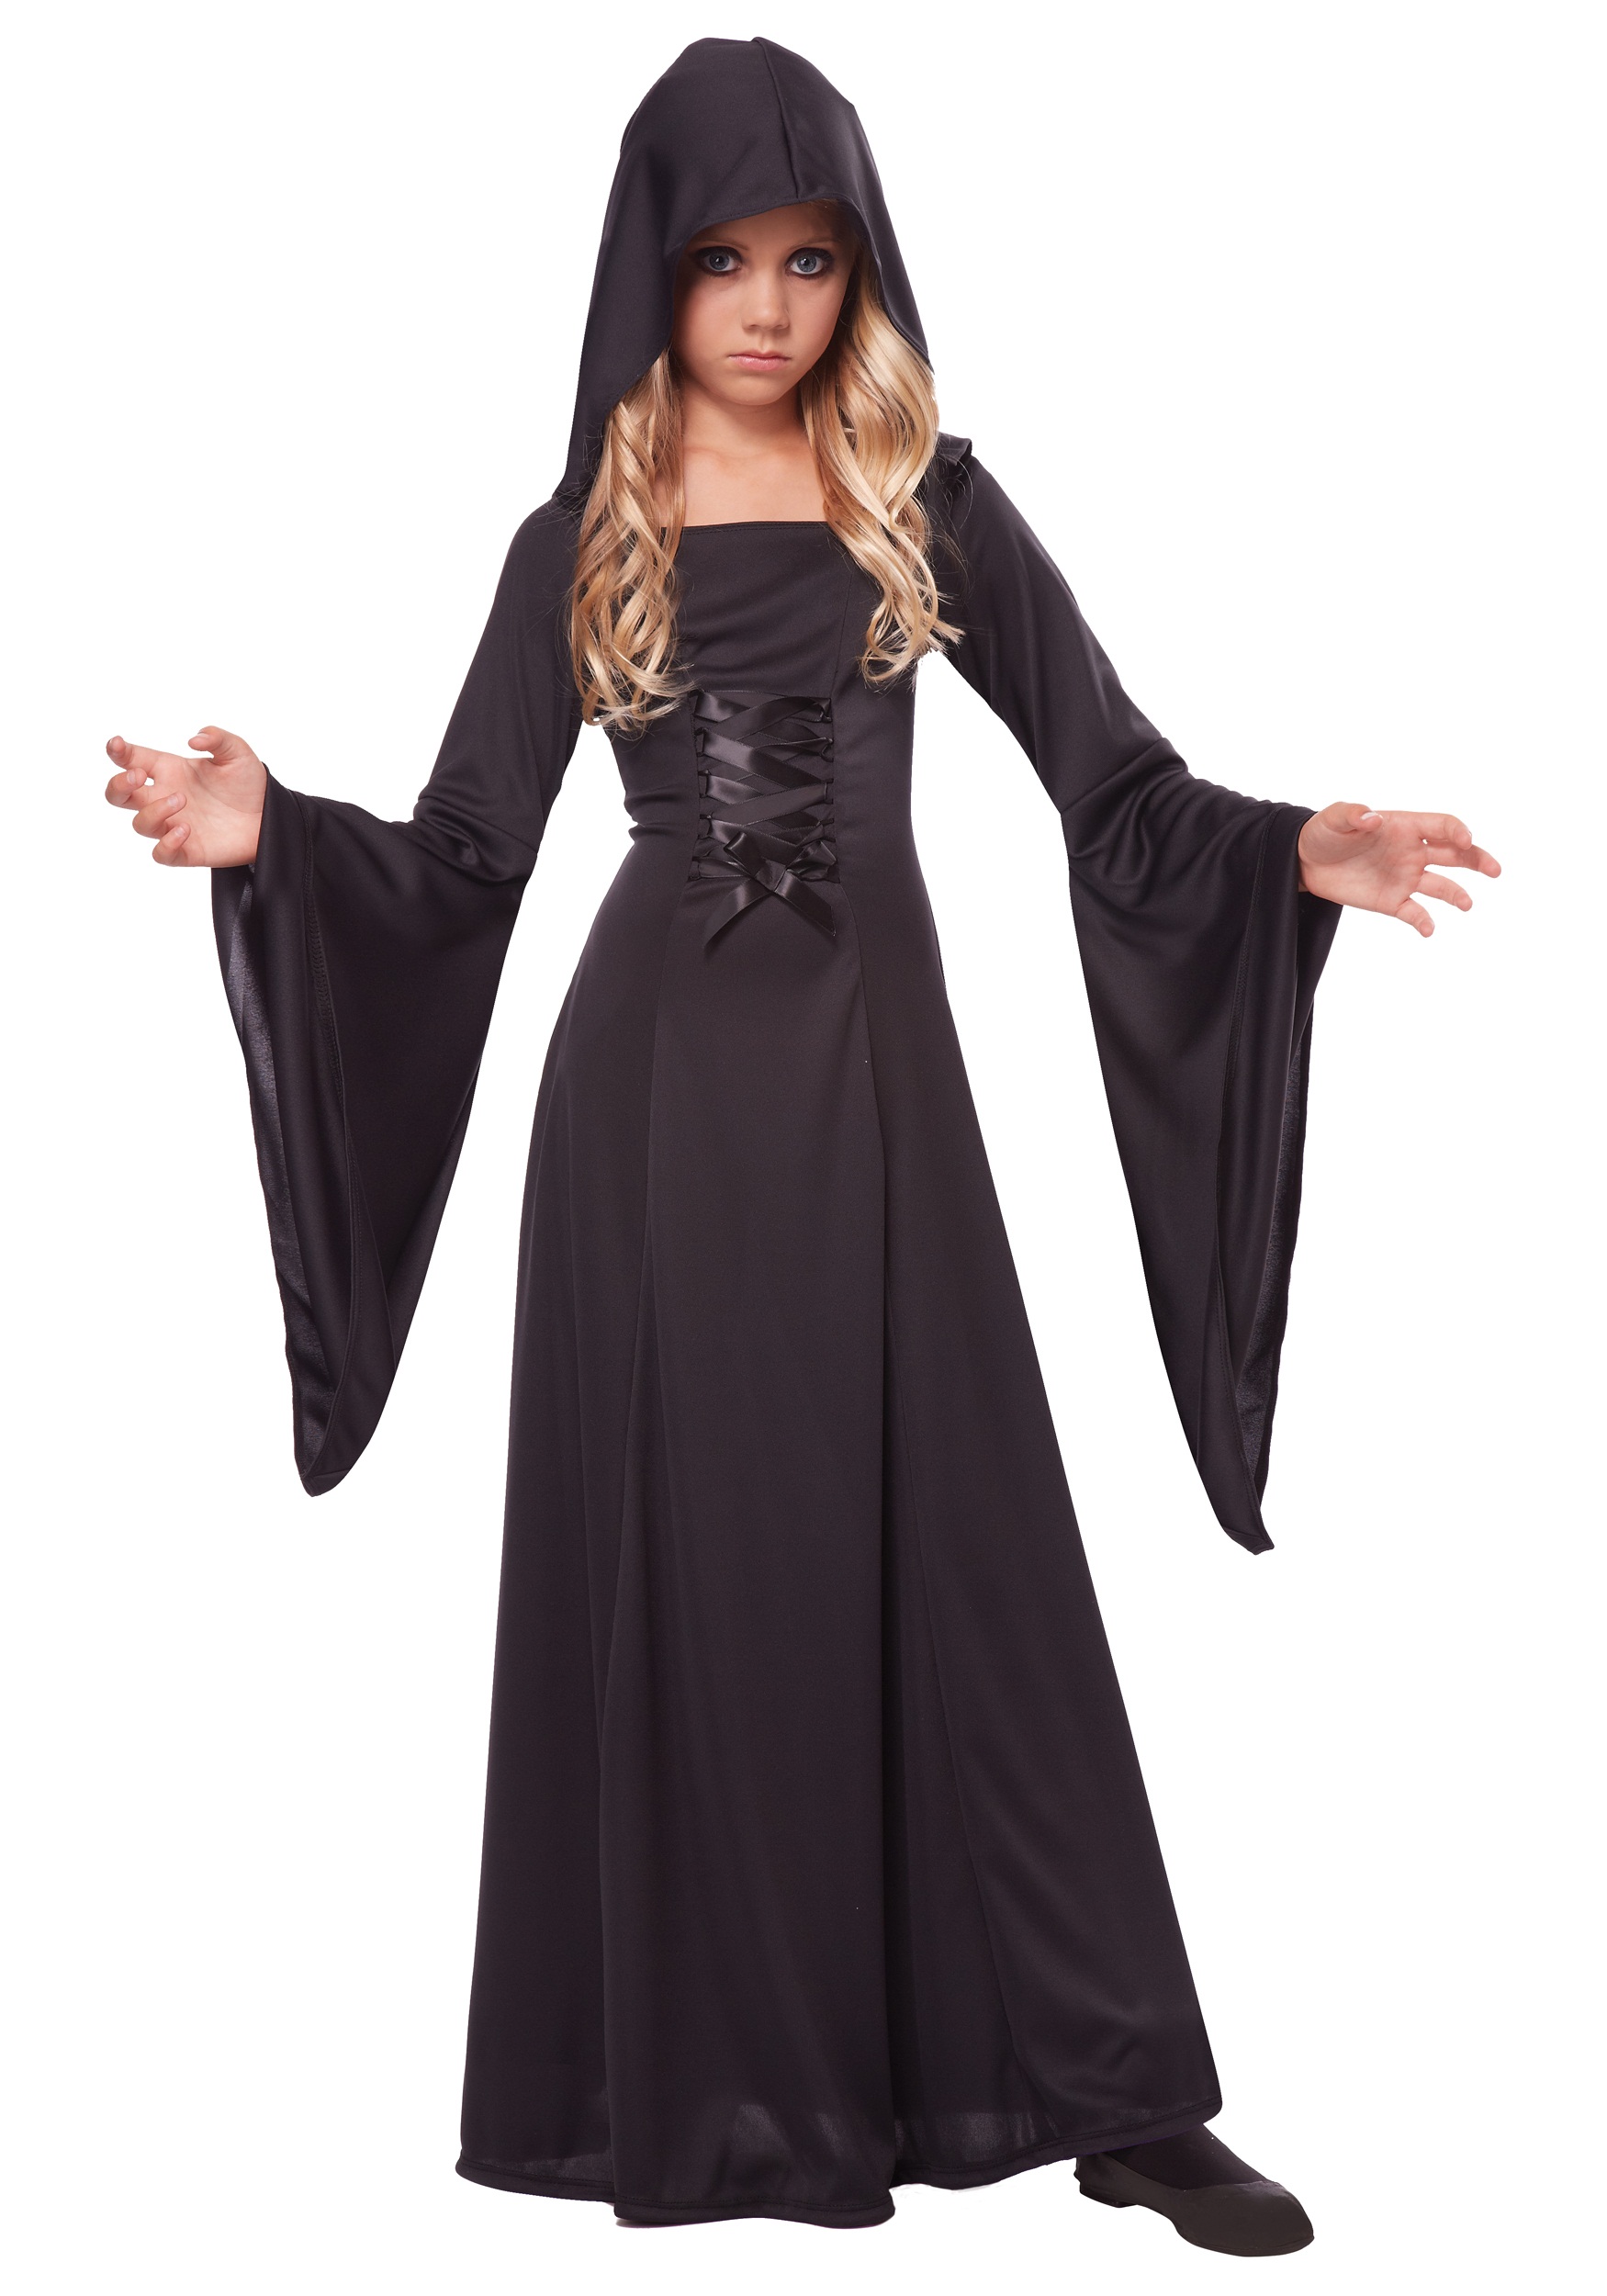 the black robe